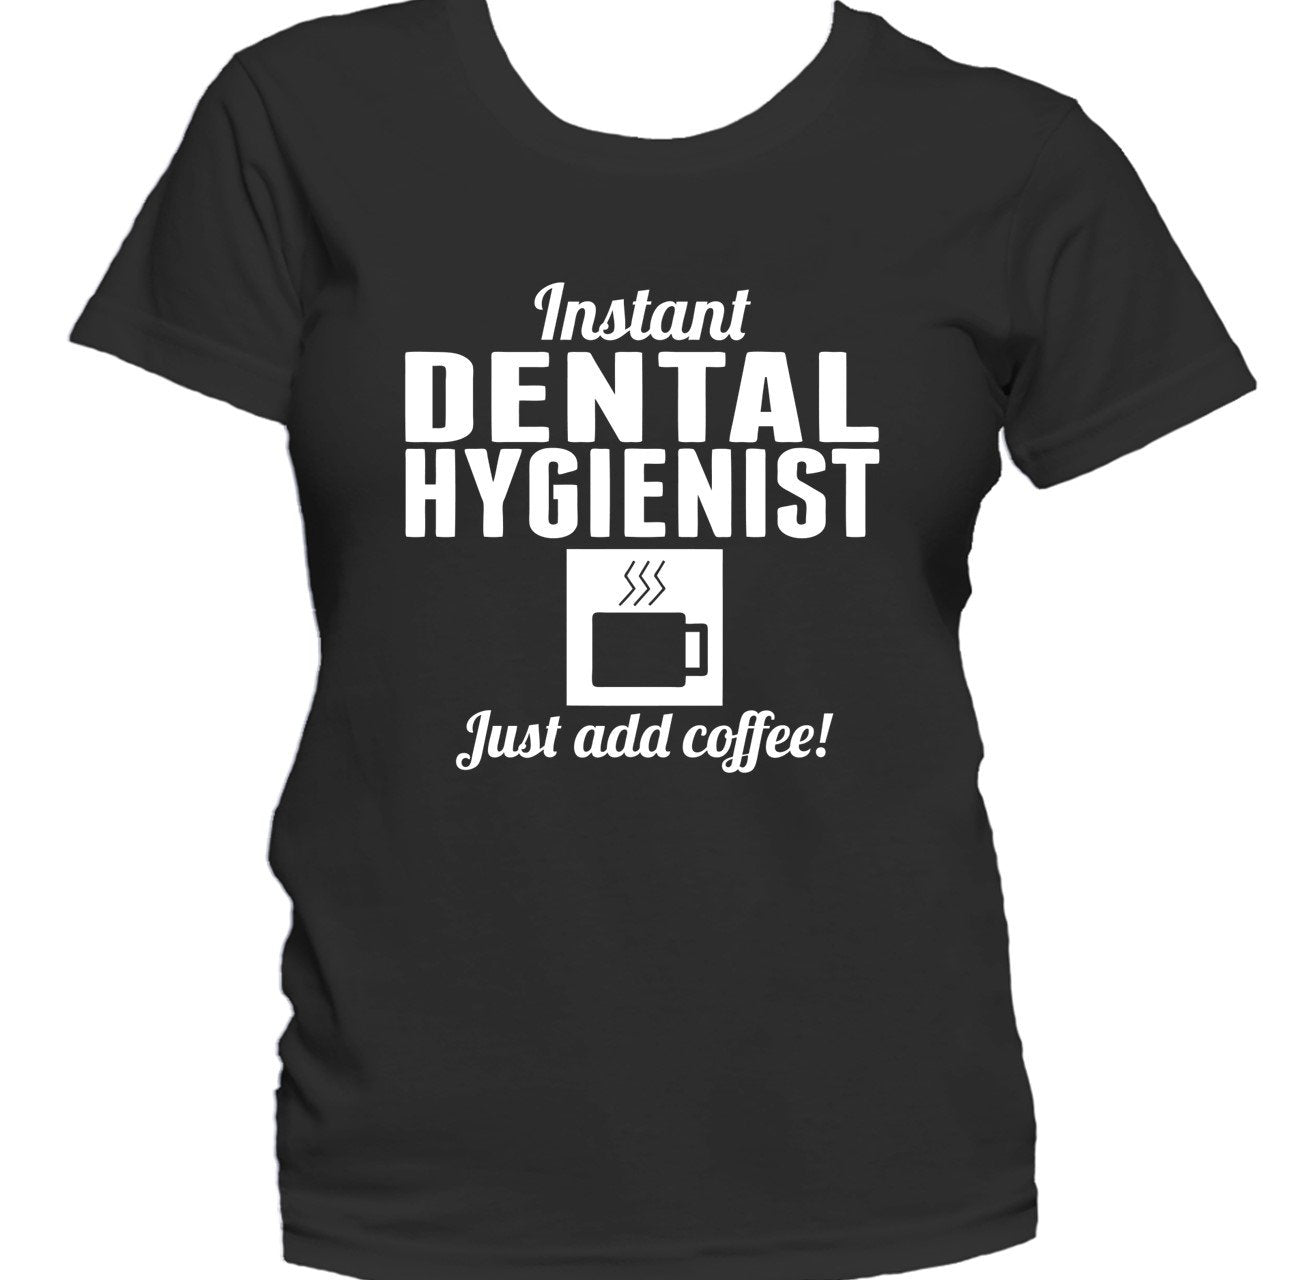 Instant Dental Hygienist Just Add Coffee Funny Women's T-Shirt